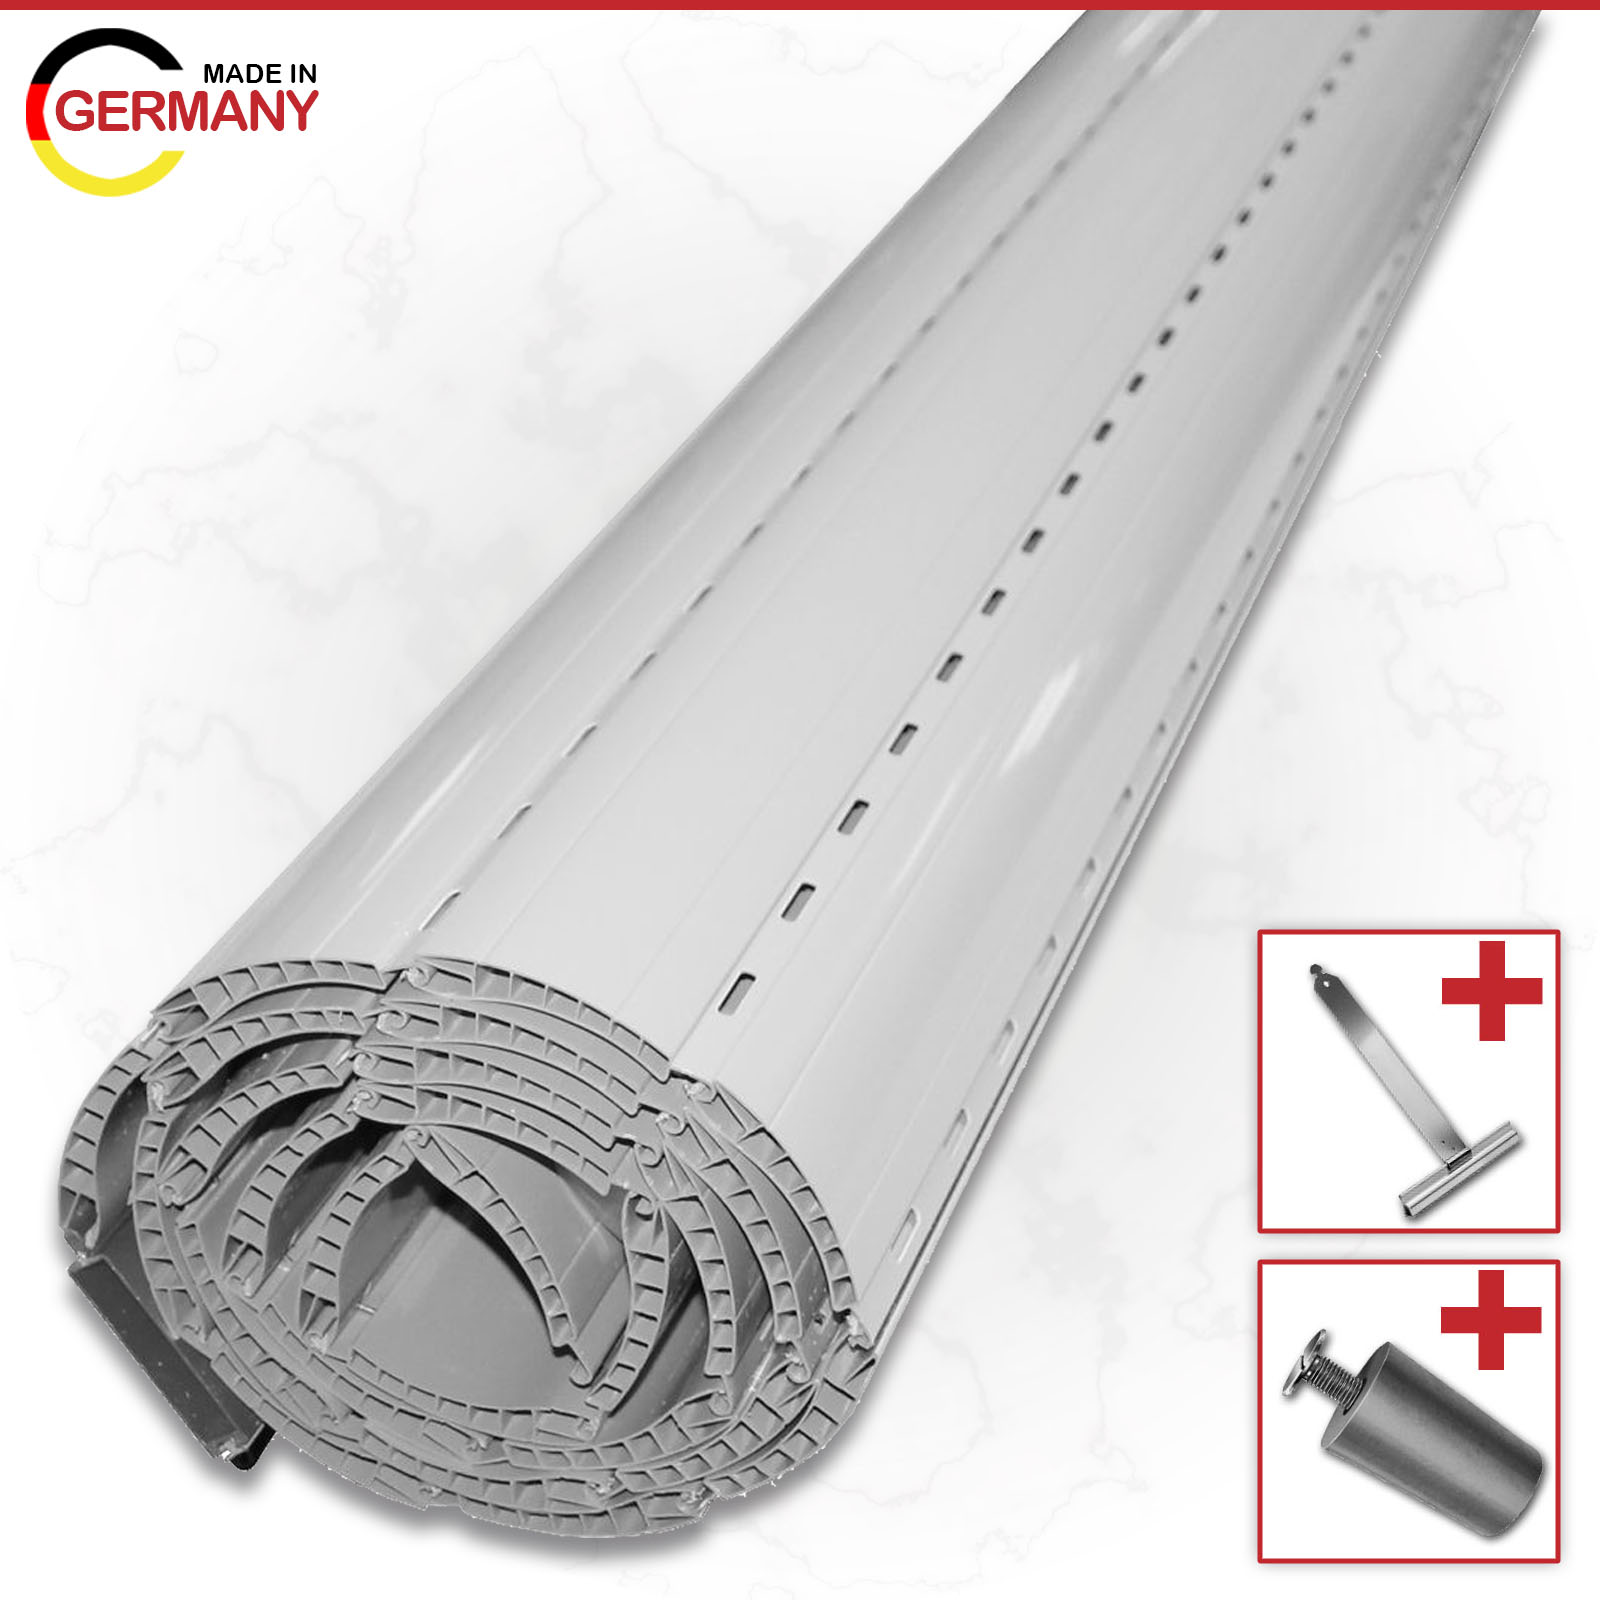 Rollladen Behang PVC 37 mm | Profil PI37